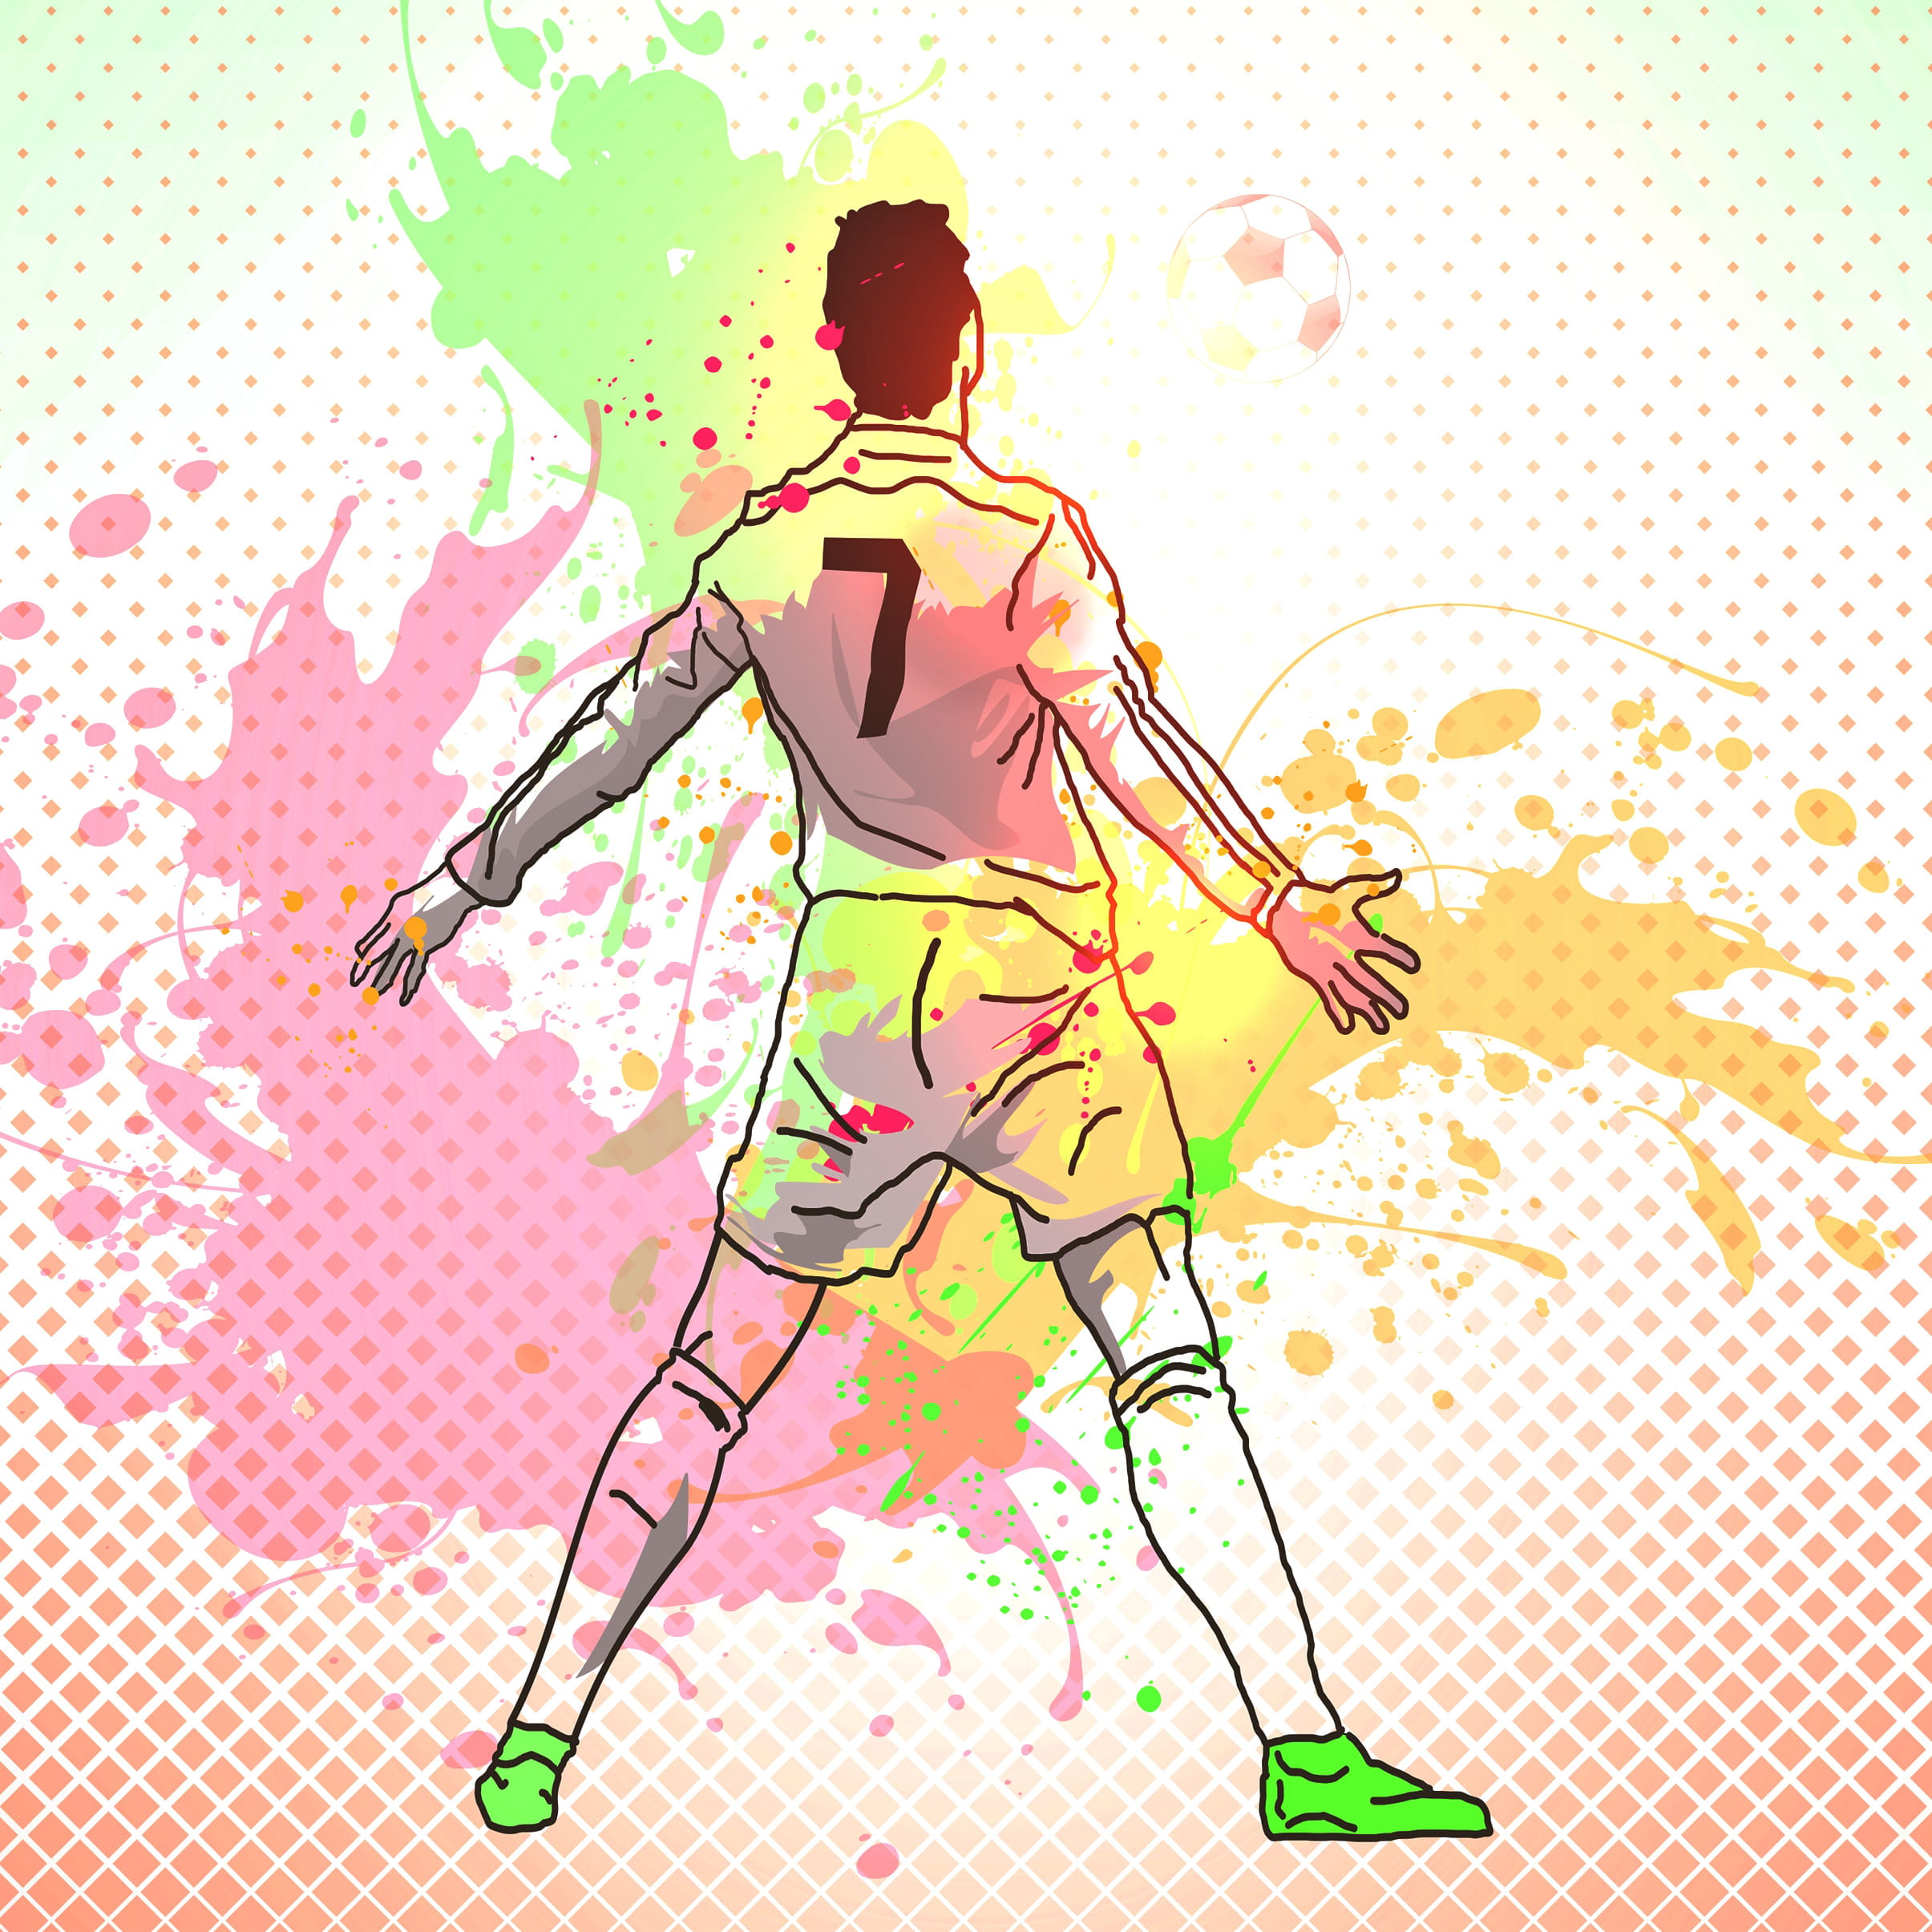 Football Player - Soccer Player - Striker, action, art, artistic